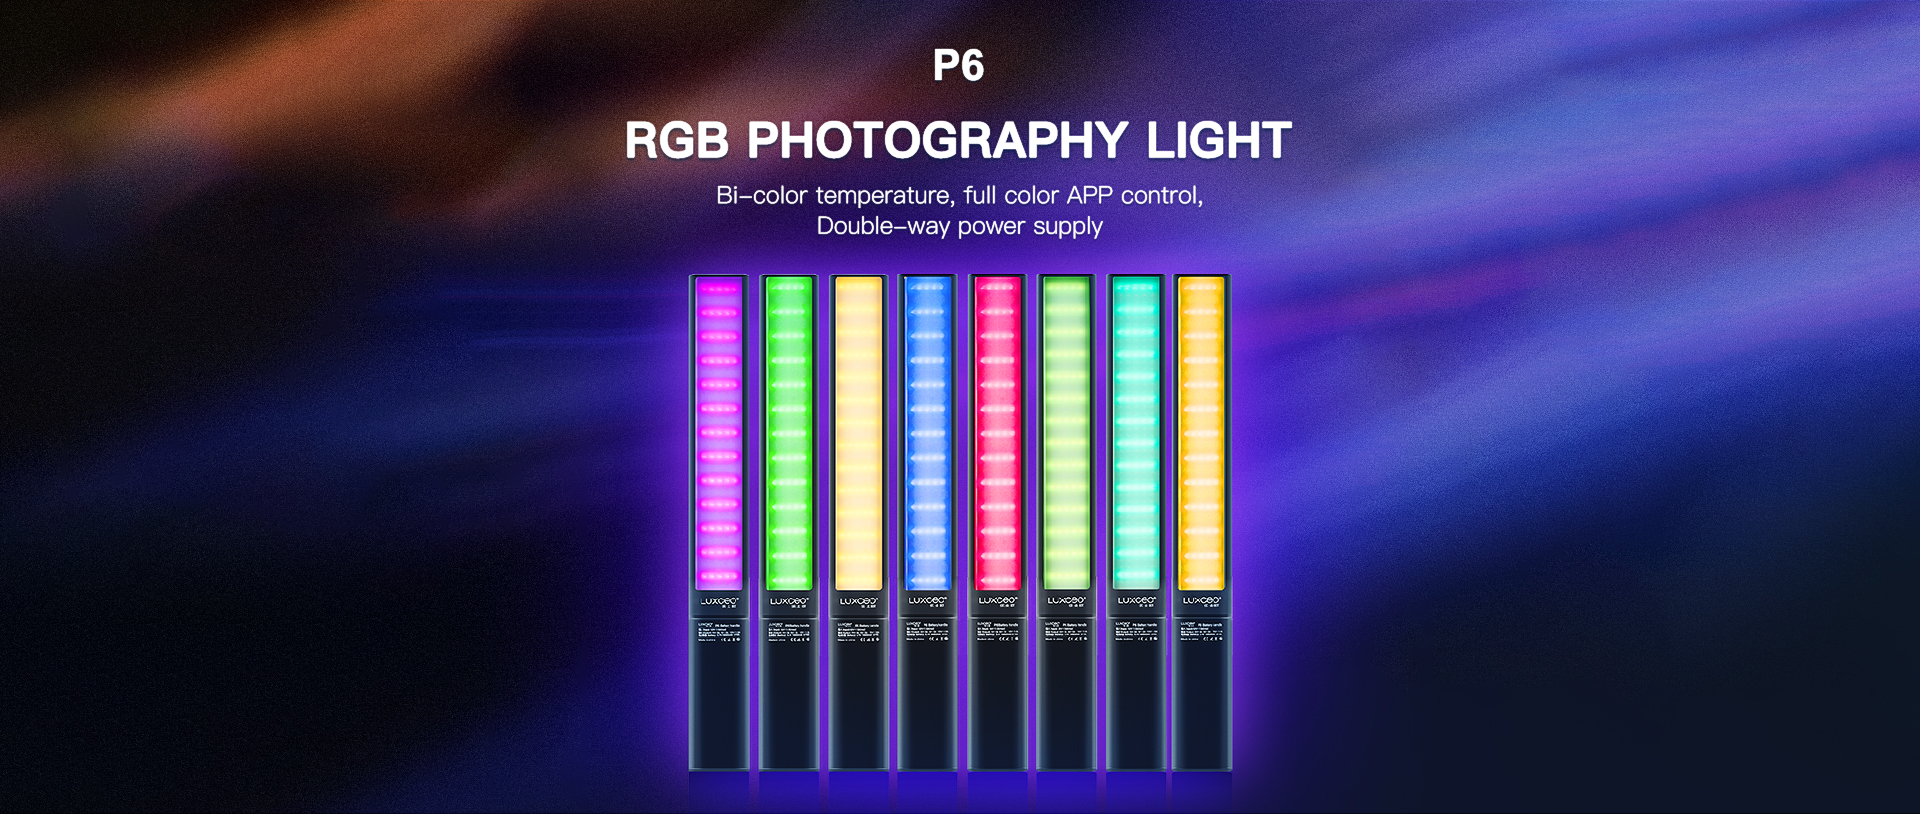 P6 RGB photography fill light